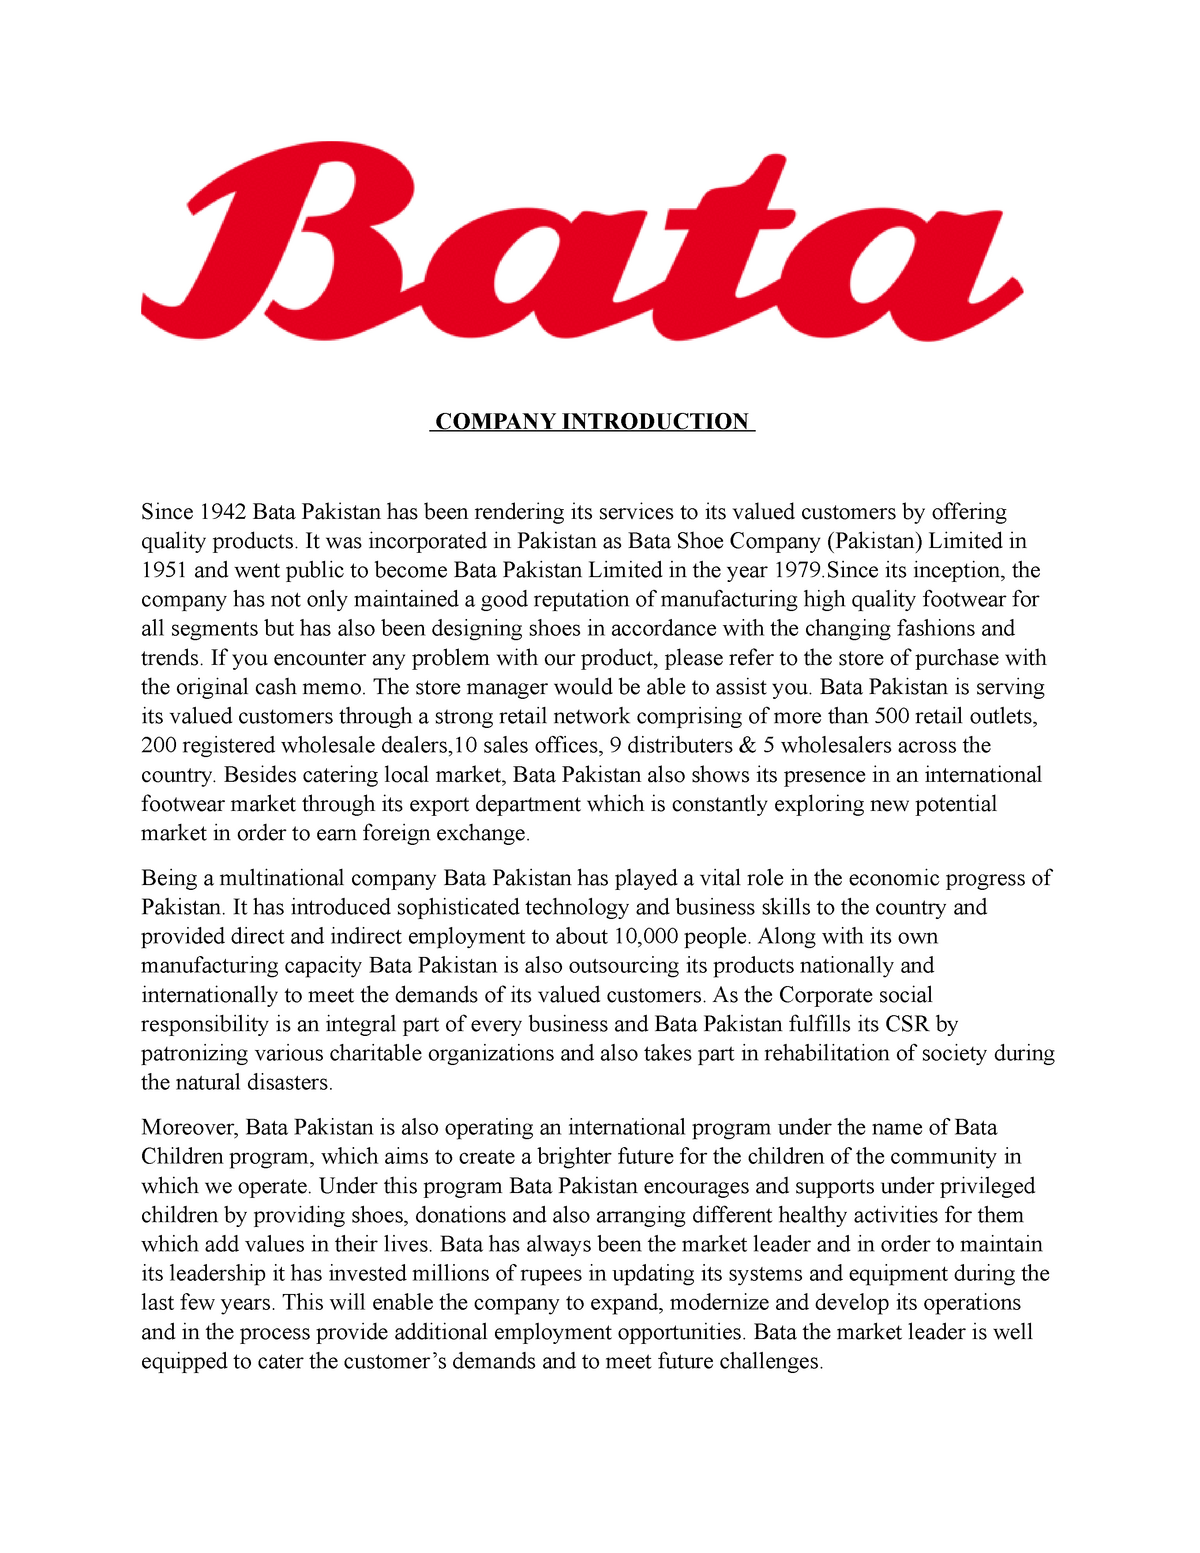 literature review on bata company